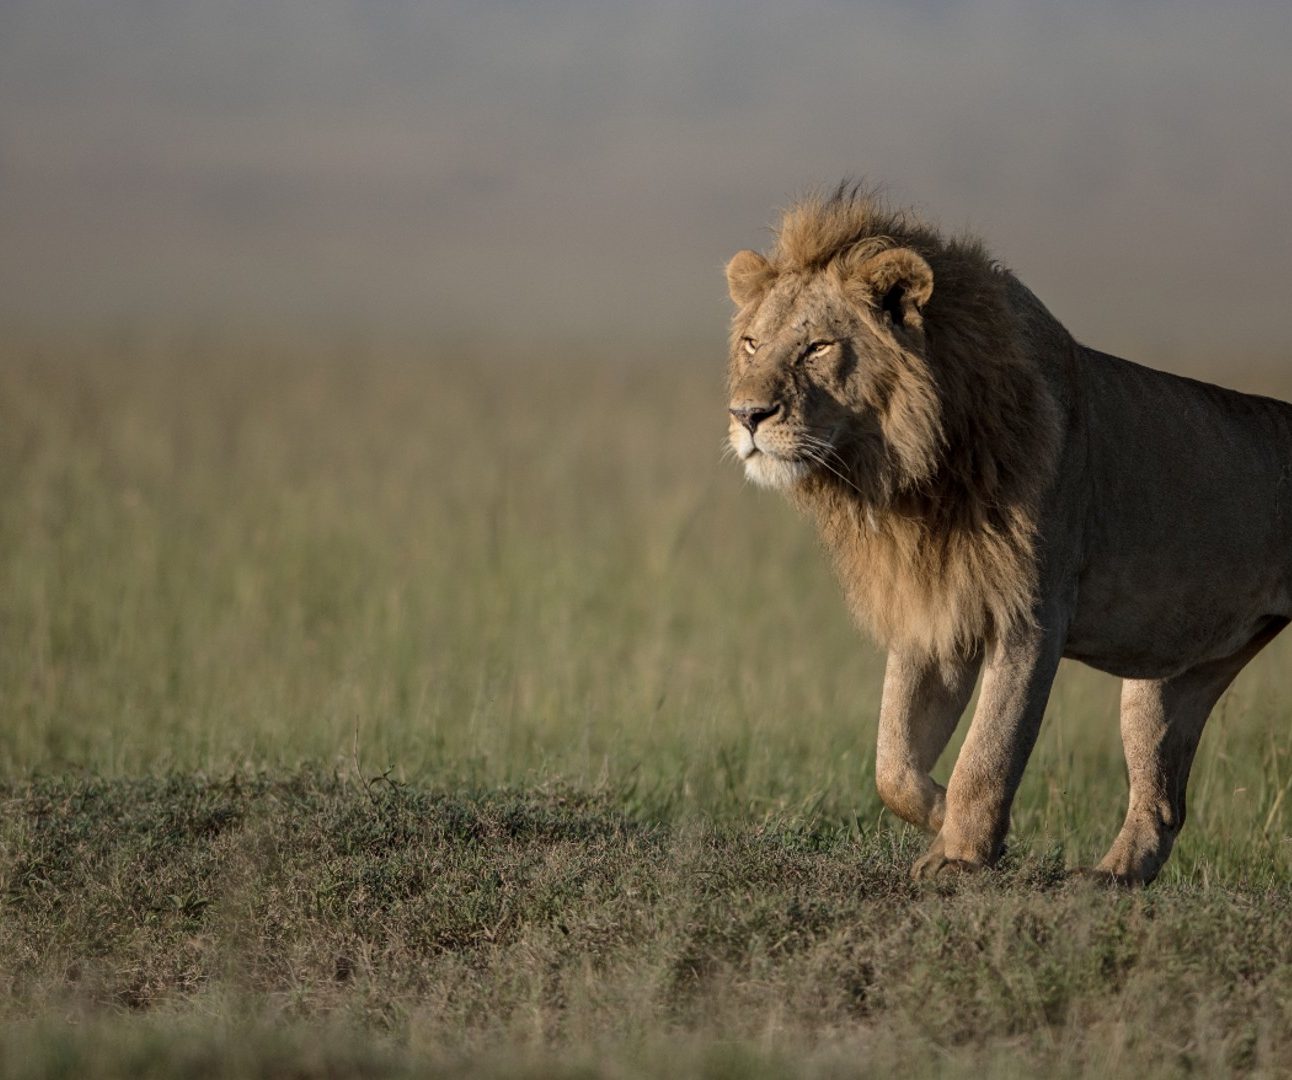 A majestic lion walking through the savannah